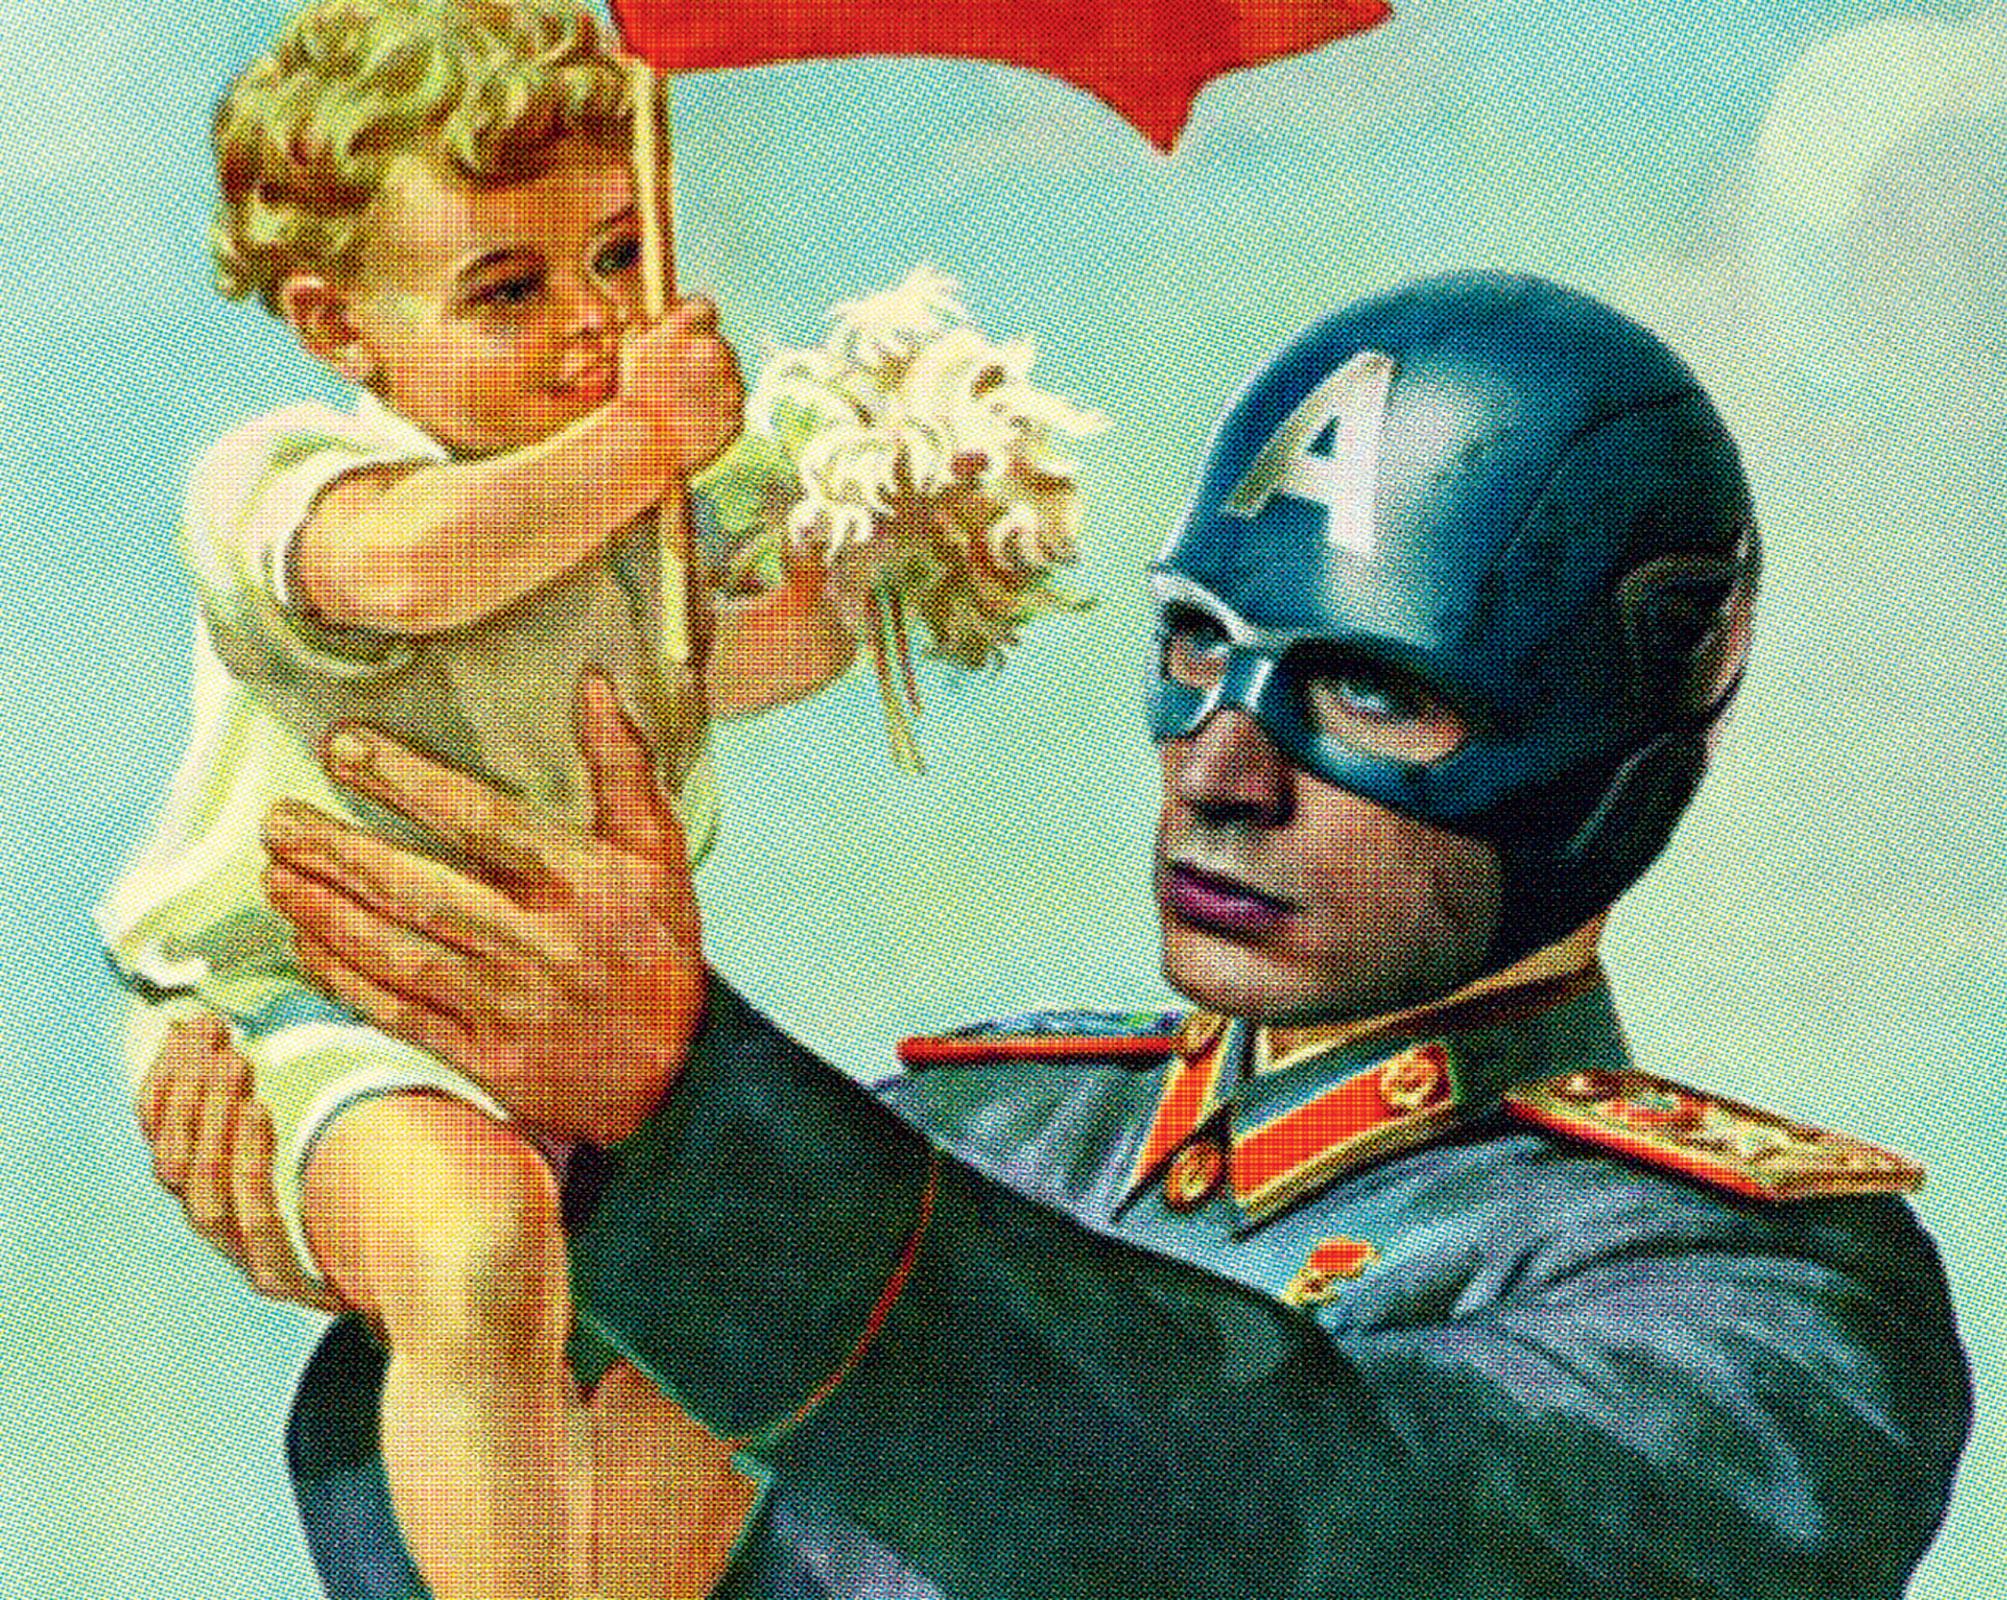 Captain America als Josef Stalin